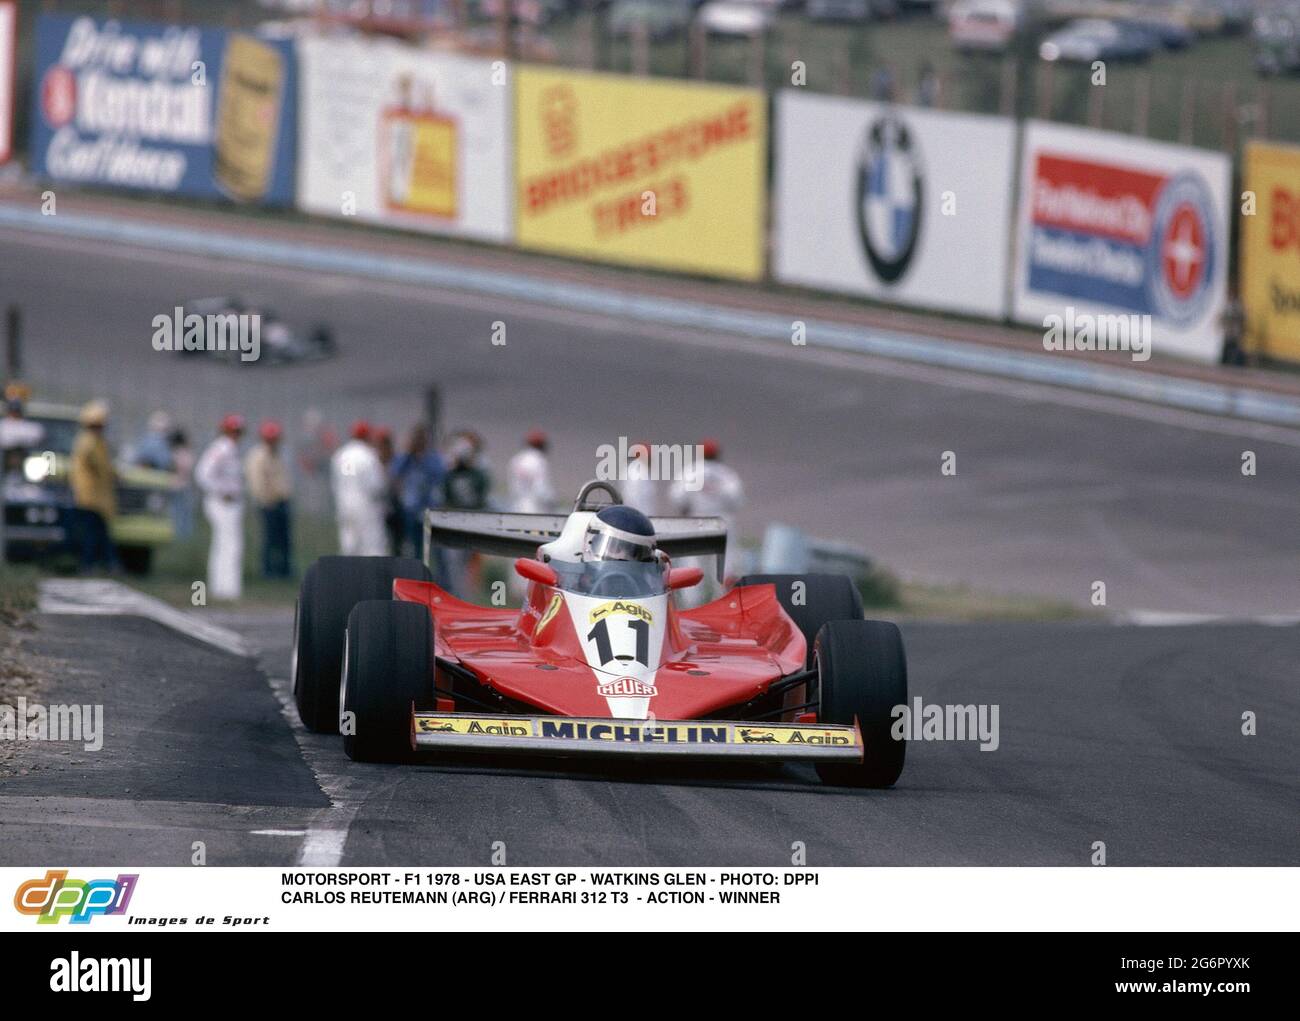 MOTORSPORT - F1 1978 - USA EAST GP - WATKINS GLEN - PHOTO: DPPI CARLOS REUTEMANN (ARG) / FERRARI 312 T3 - ACTION - WINNER Stock Photo